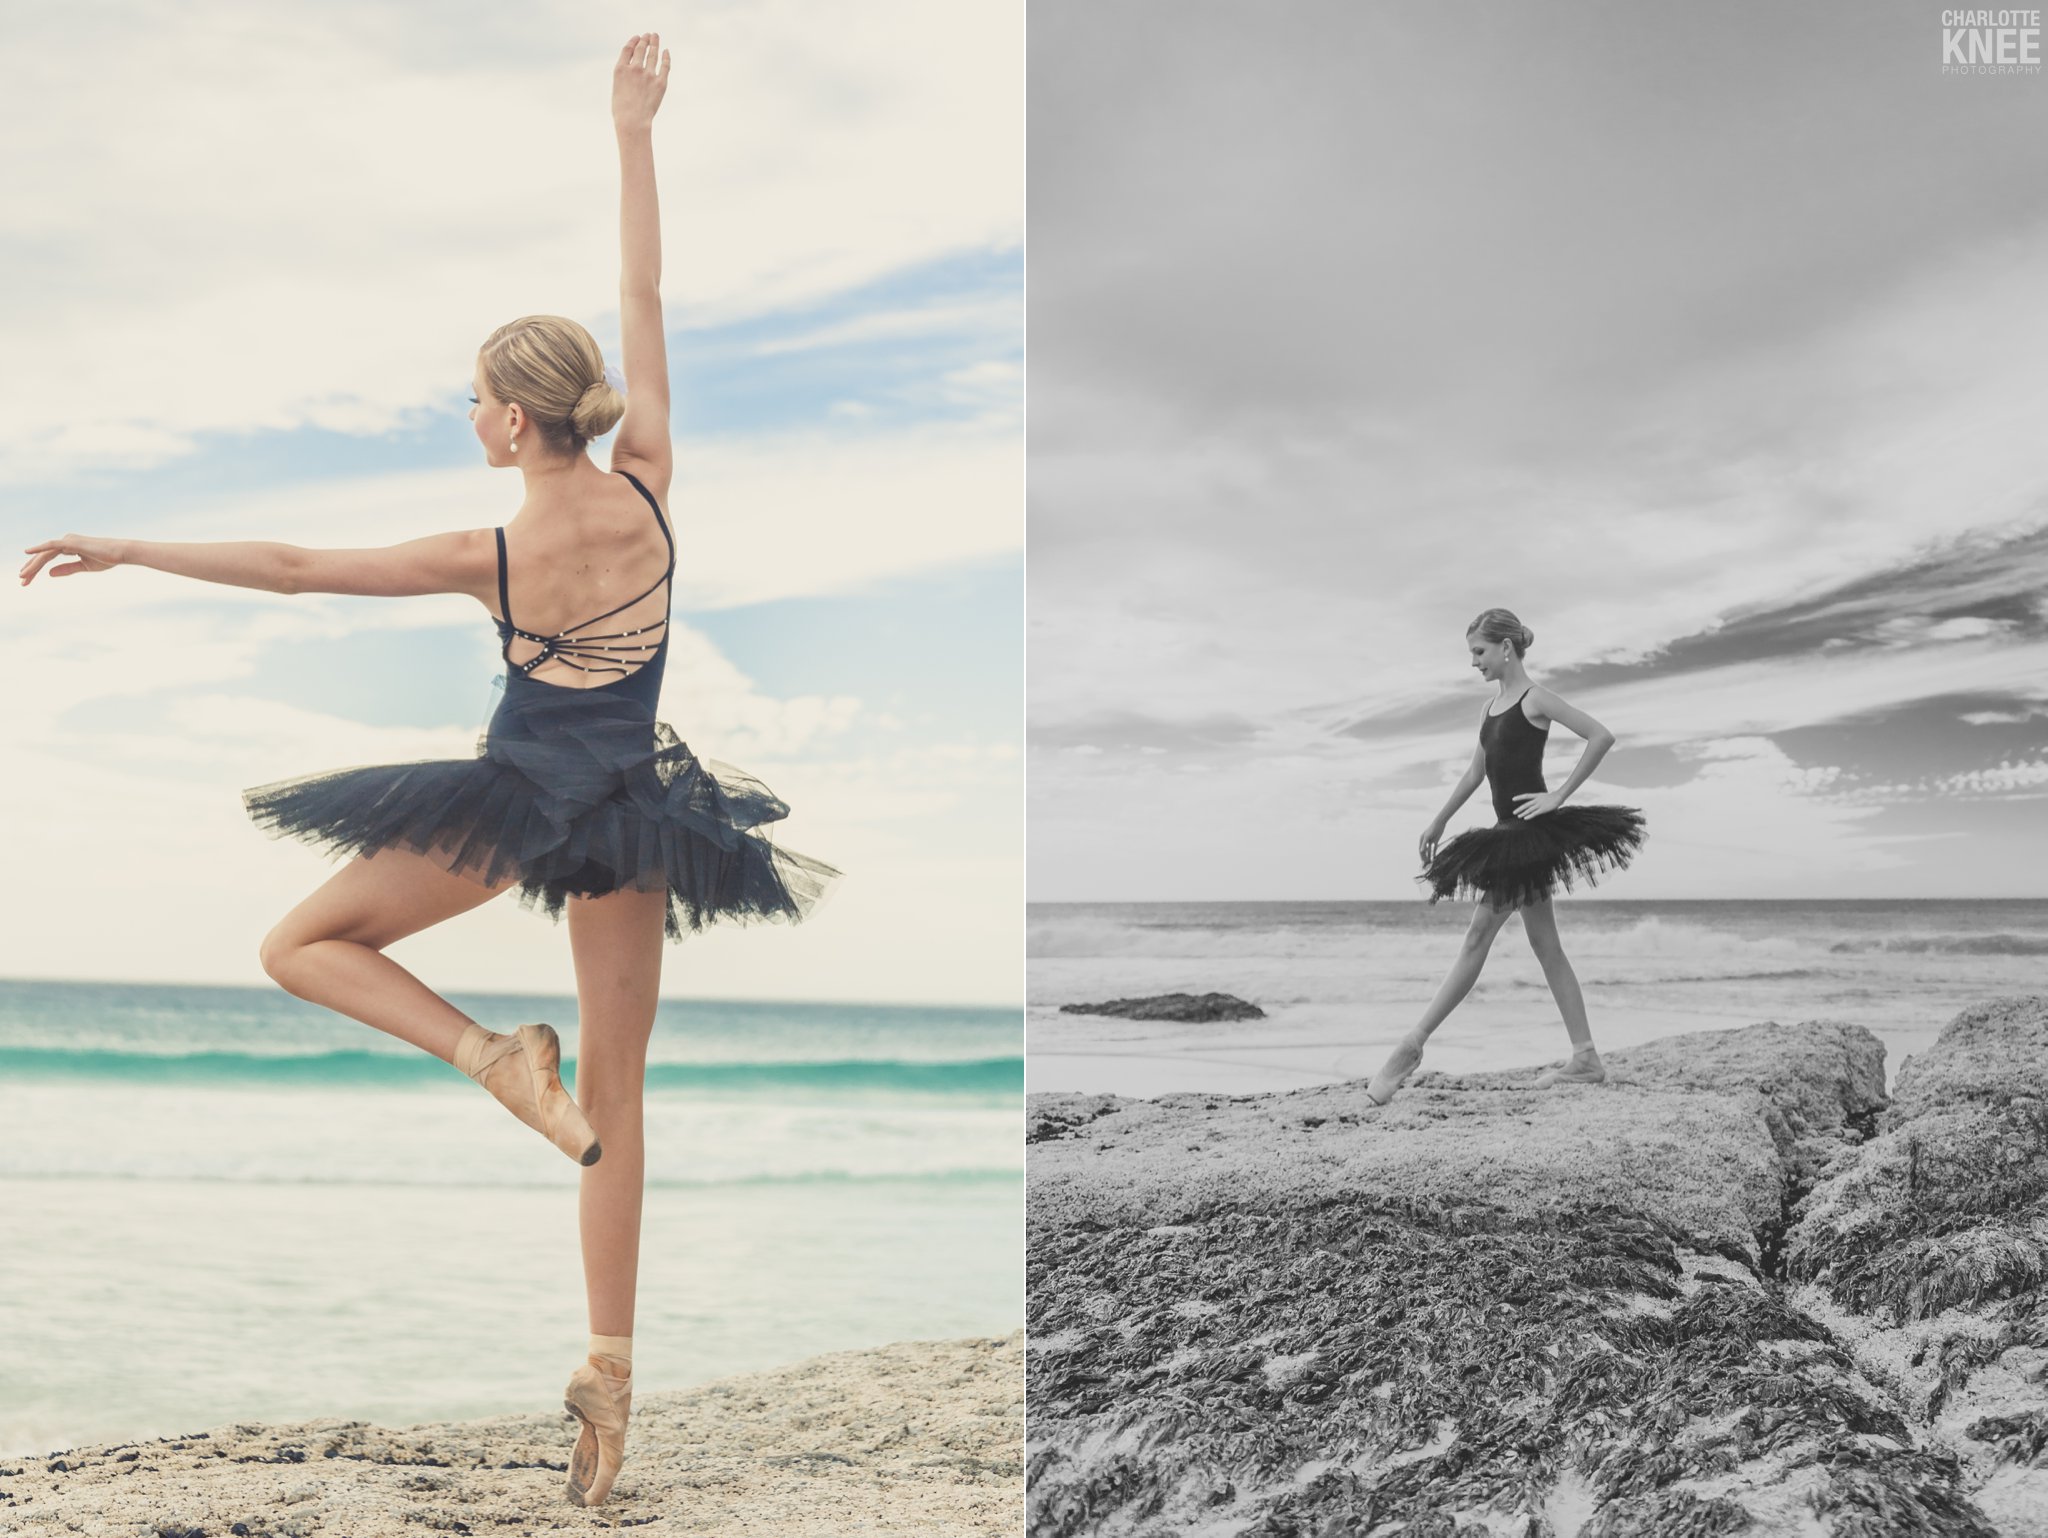 Portrait-Photography-Ballerina-Ashton-Leigh-Parker-Charlotte-Knee-Photography_0006.jpg